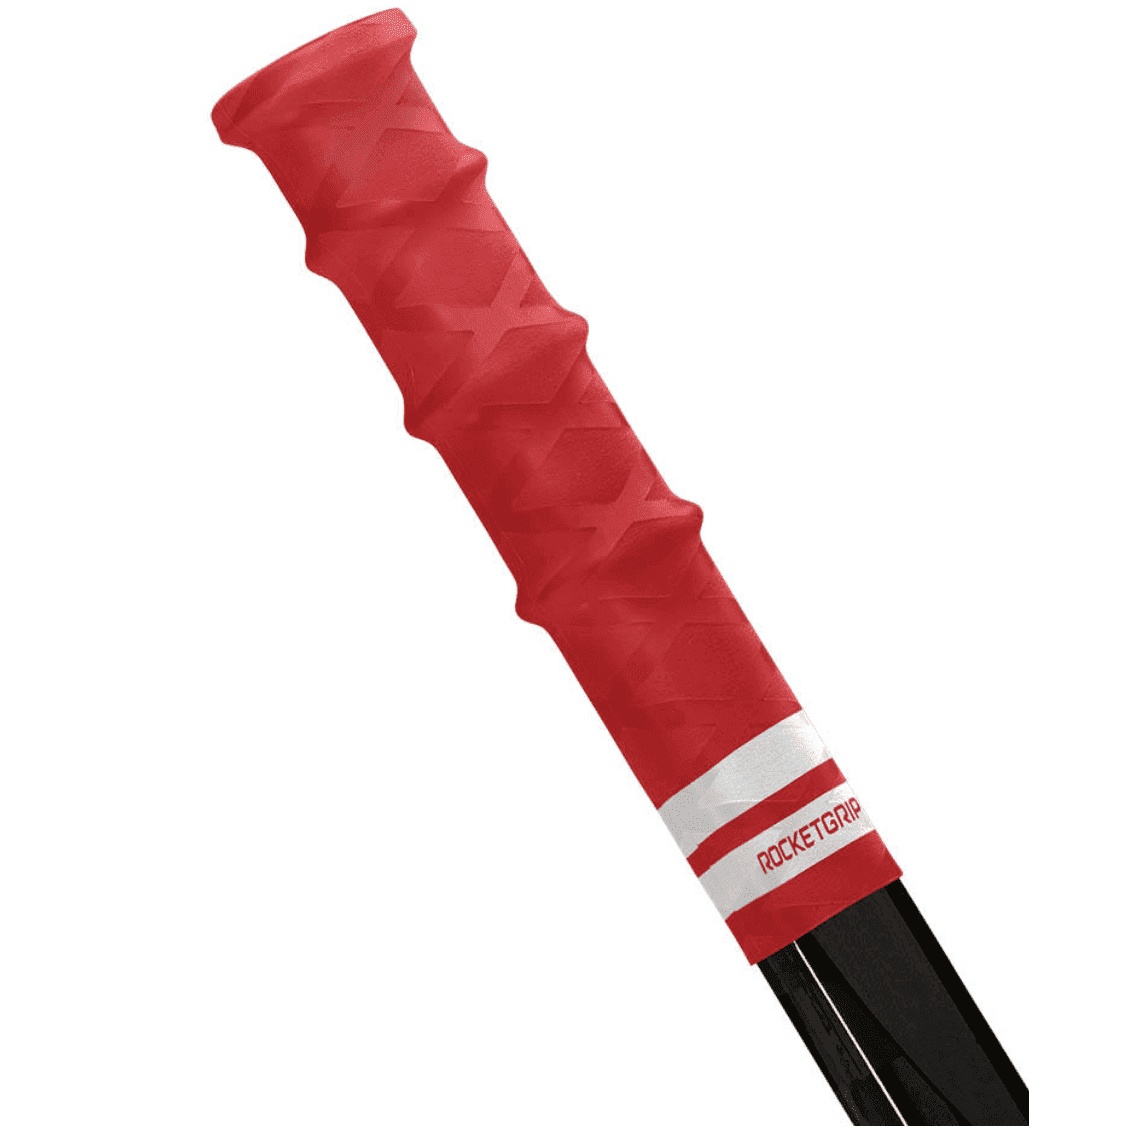 RocketGrip Rubber Hockey Grip - Red / White